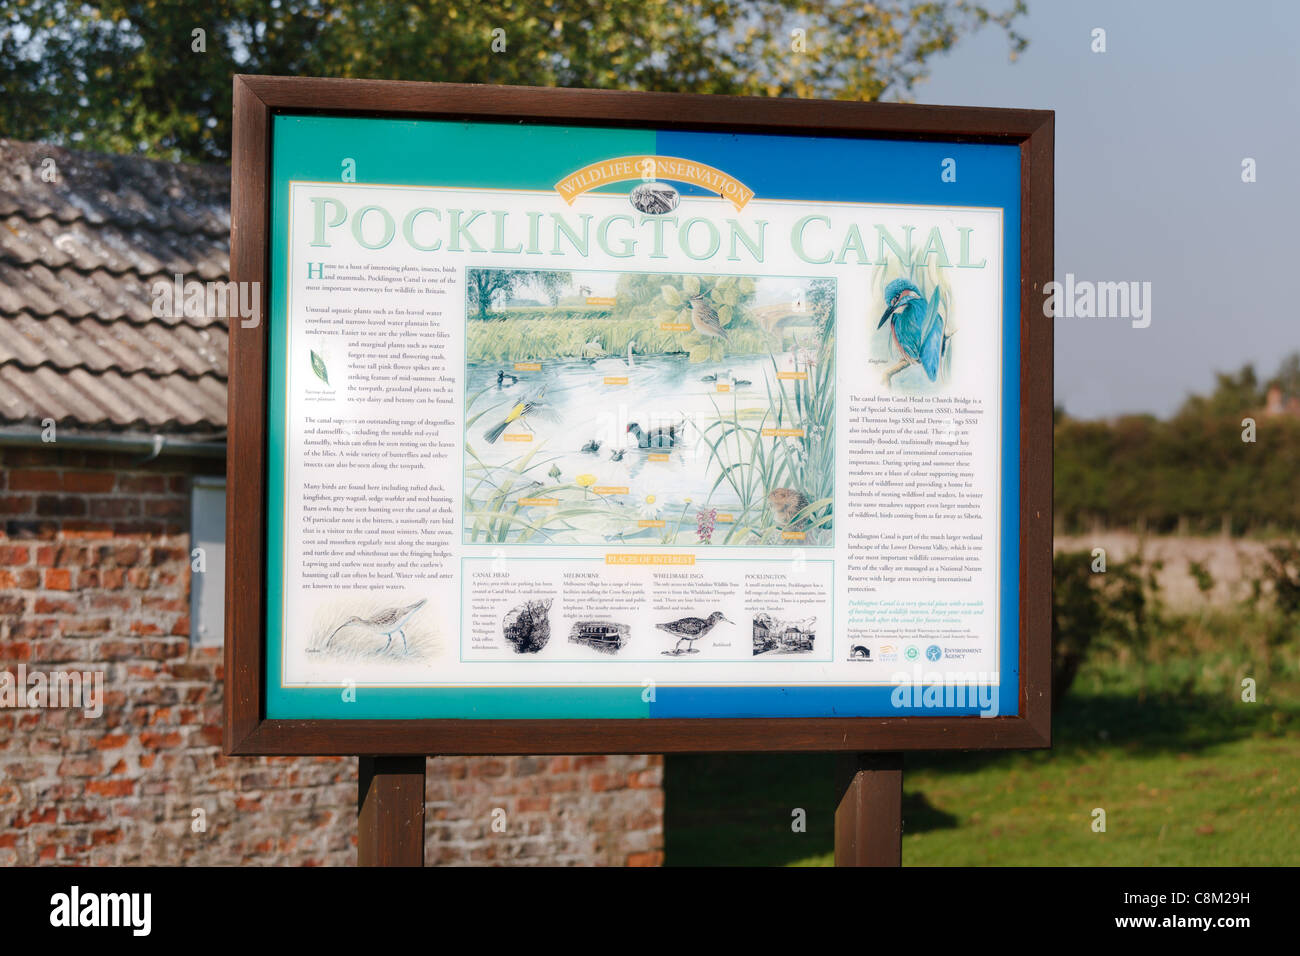 Information display at Pocklington canal, Yorkshire Stock Photo